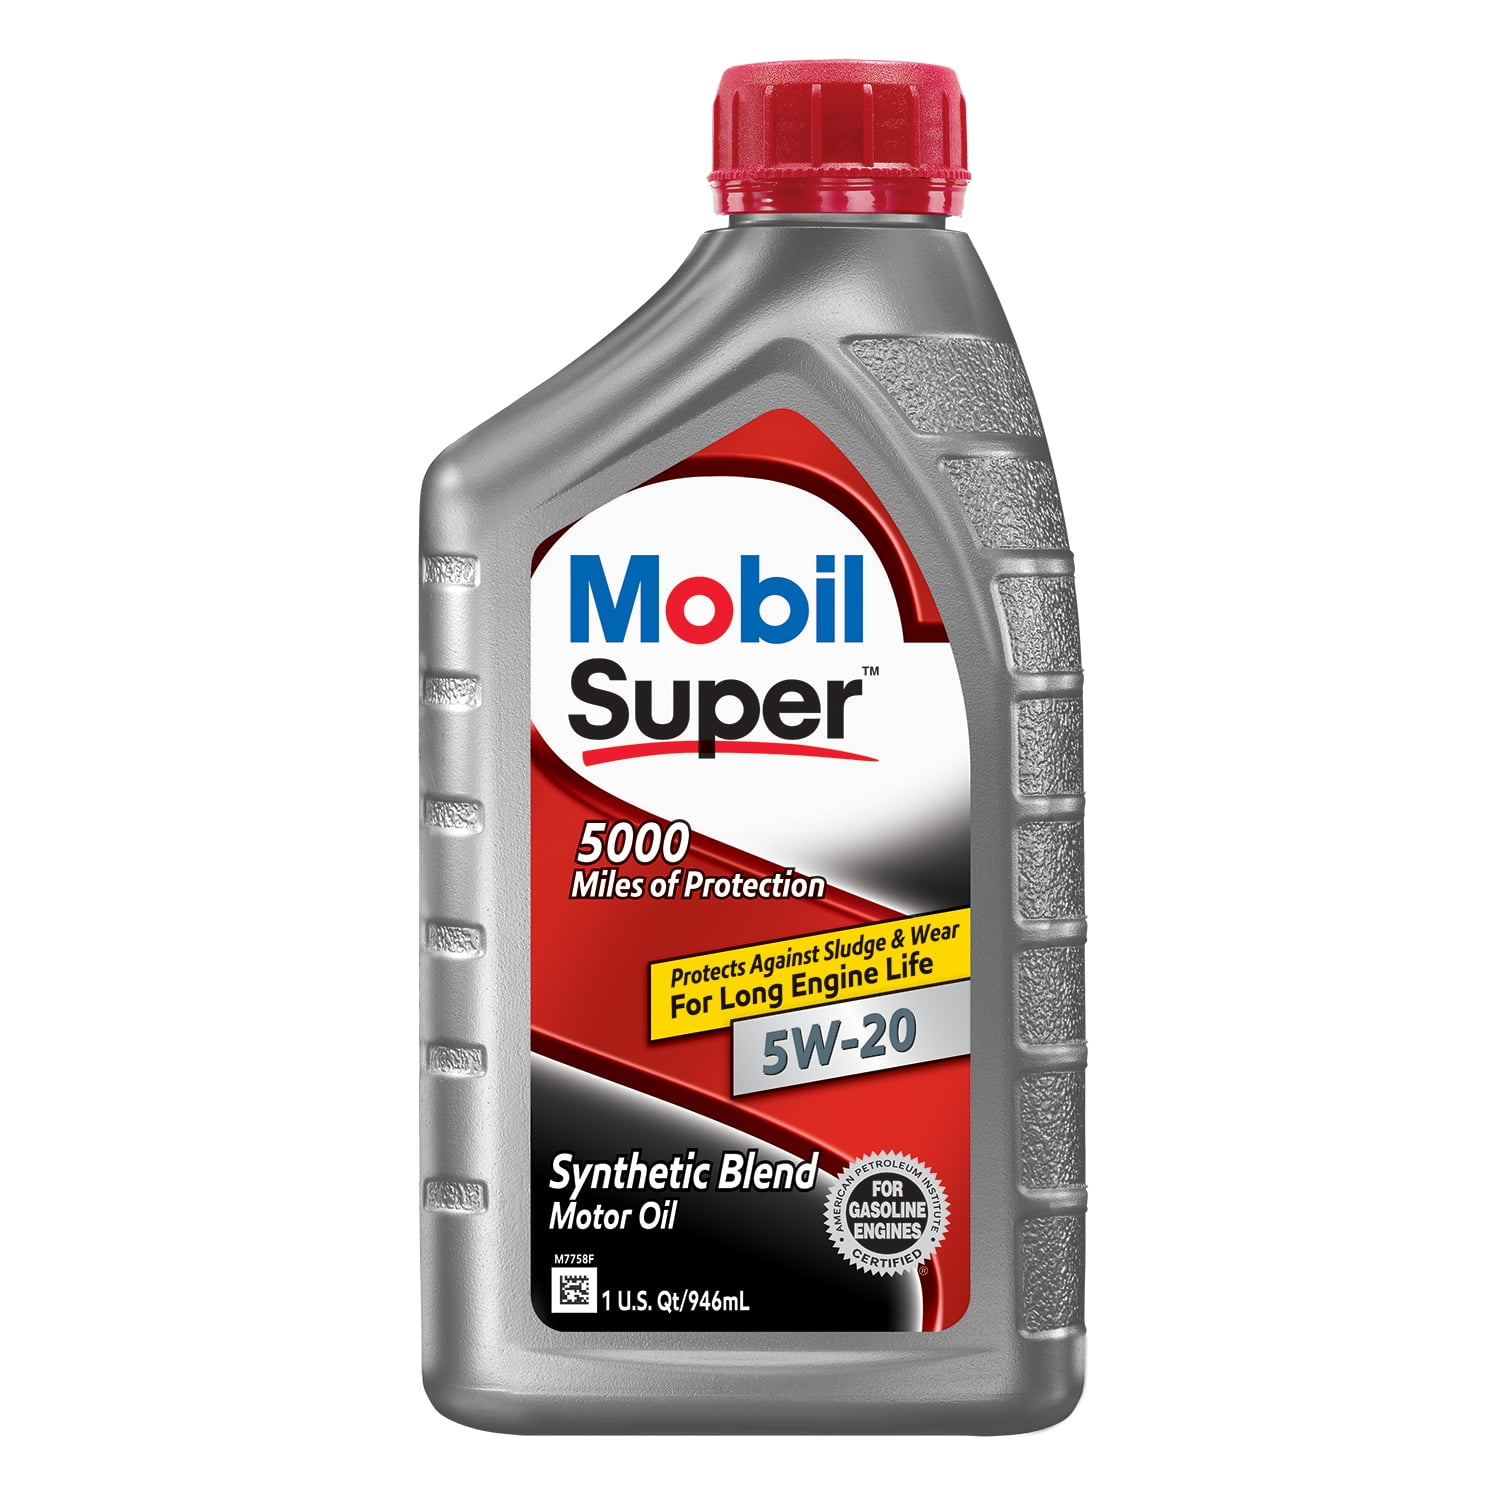 mobil-super-synthetic-blend-motor-oil-5w-20-1-qt-walmart